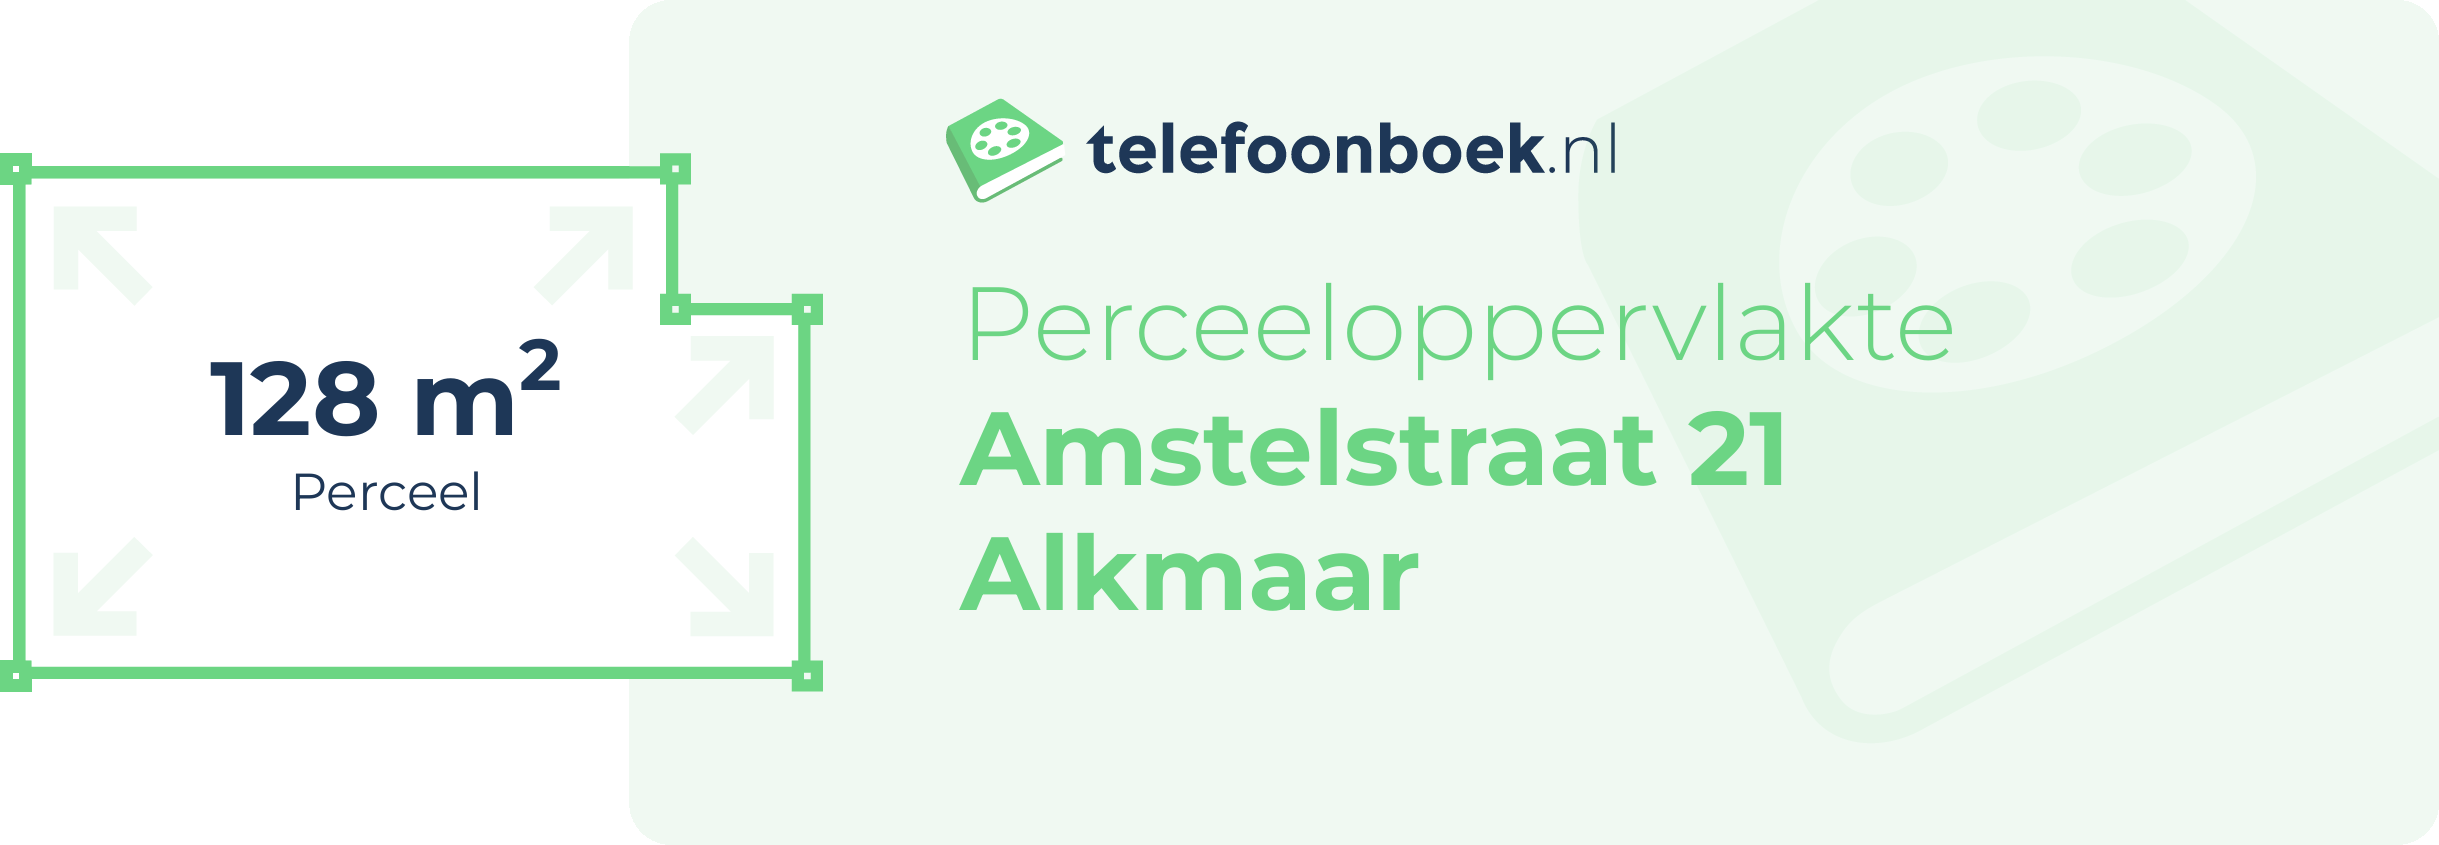 Perceeloppervlakte Amstelstraat 21 Alkmaar